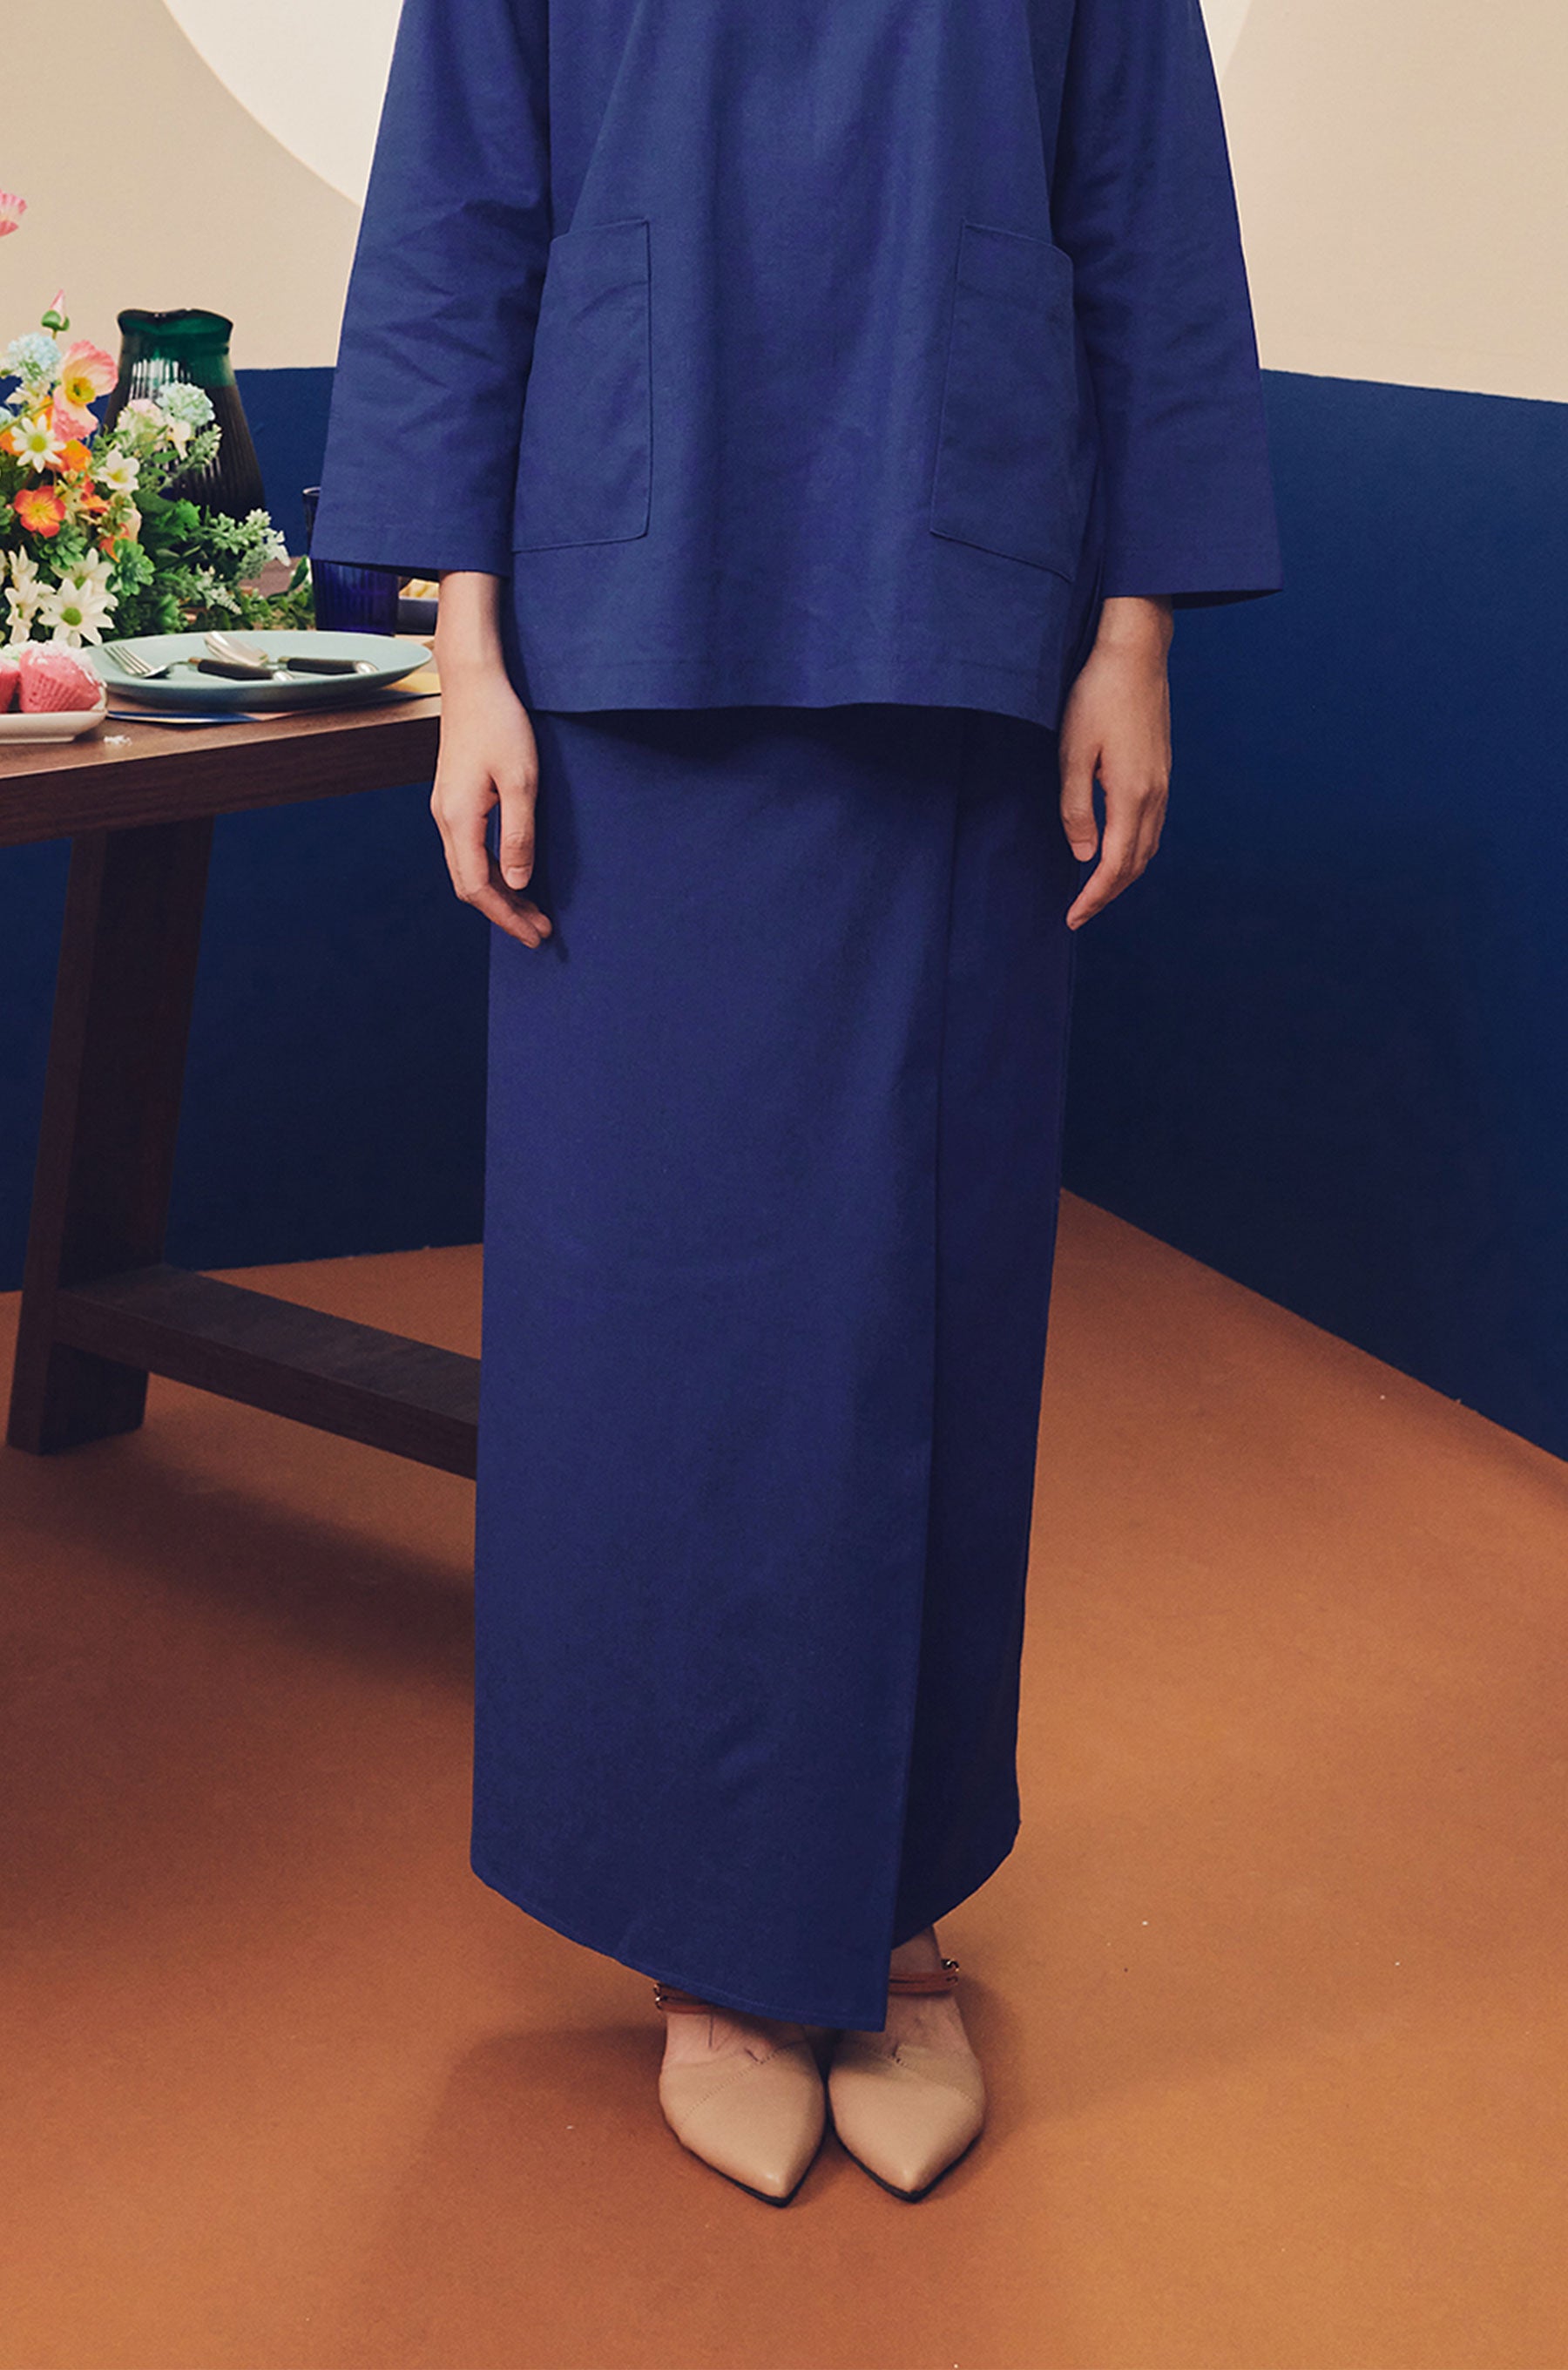 baju raya family sedondon adult woman classic skirt royal blue